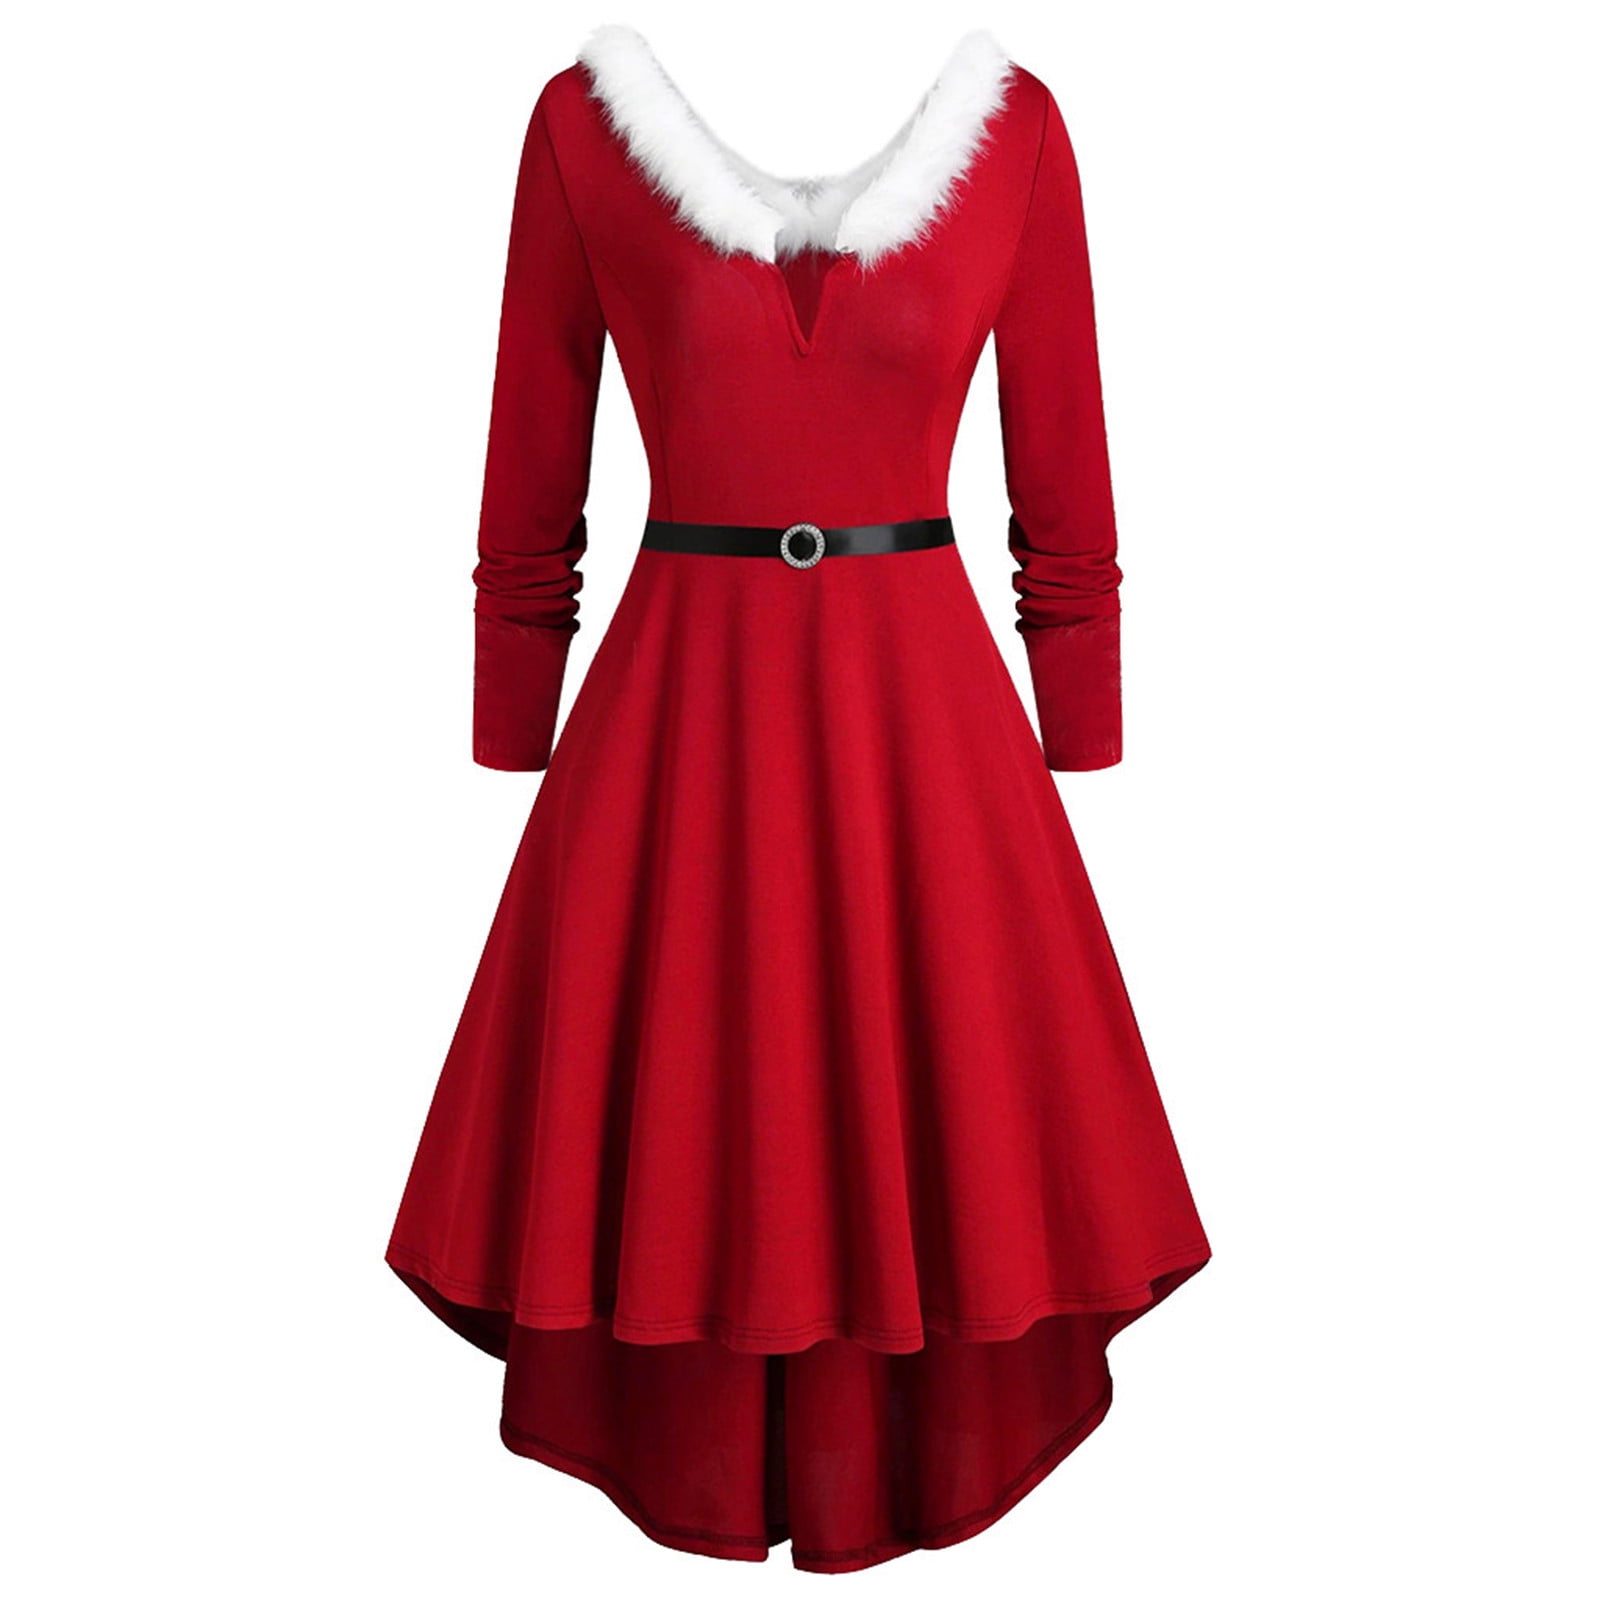 Honeeladyy Discount Christmas Party Dresses for Women Santa Claus ...